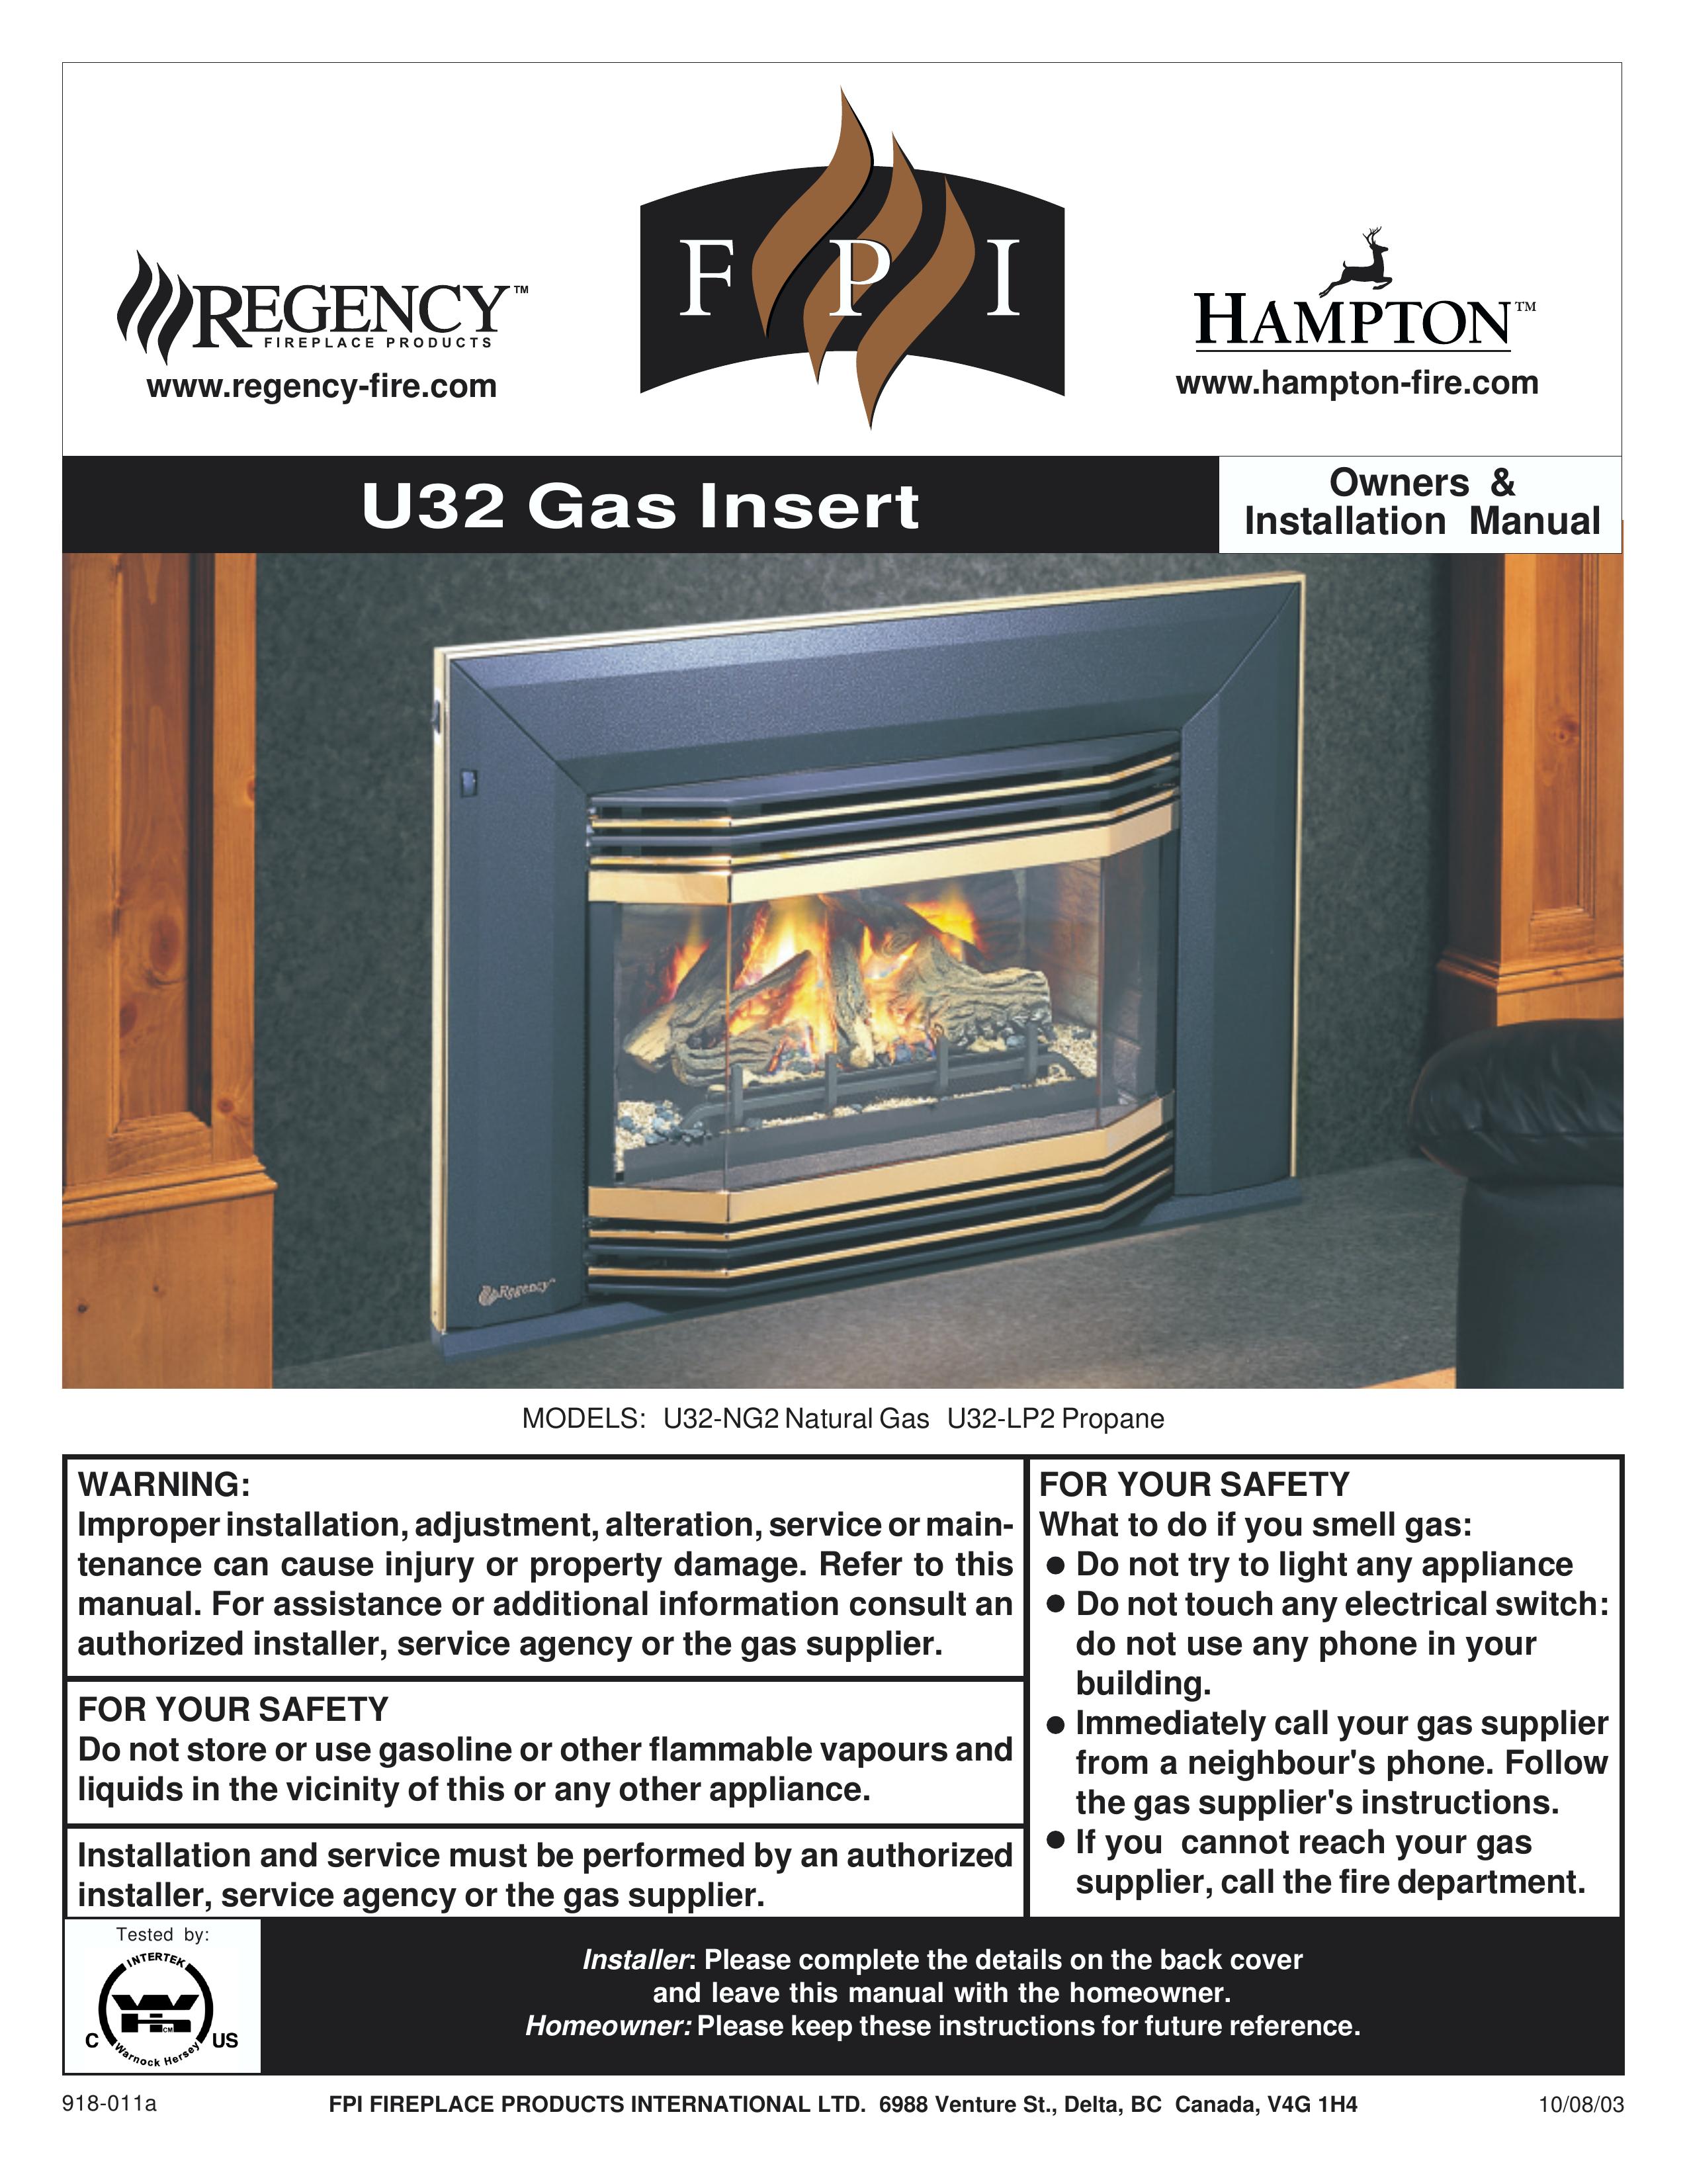 Hampton Direct U32-LP2 Fire Pit User Manual